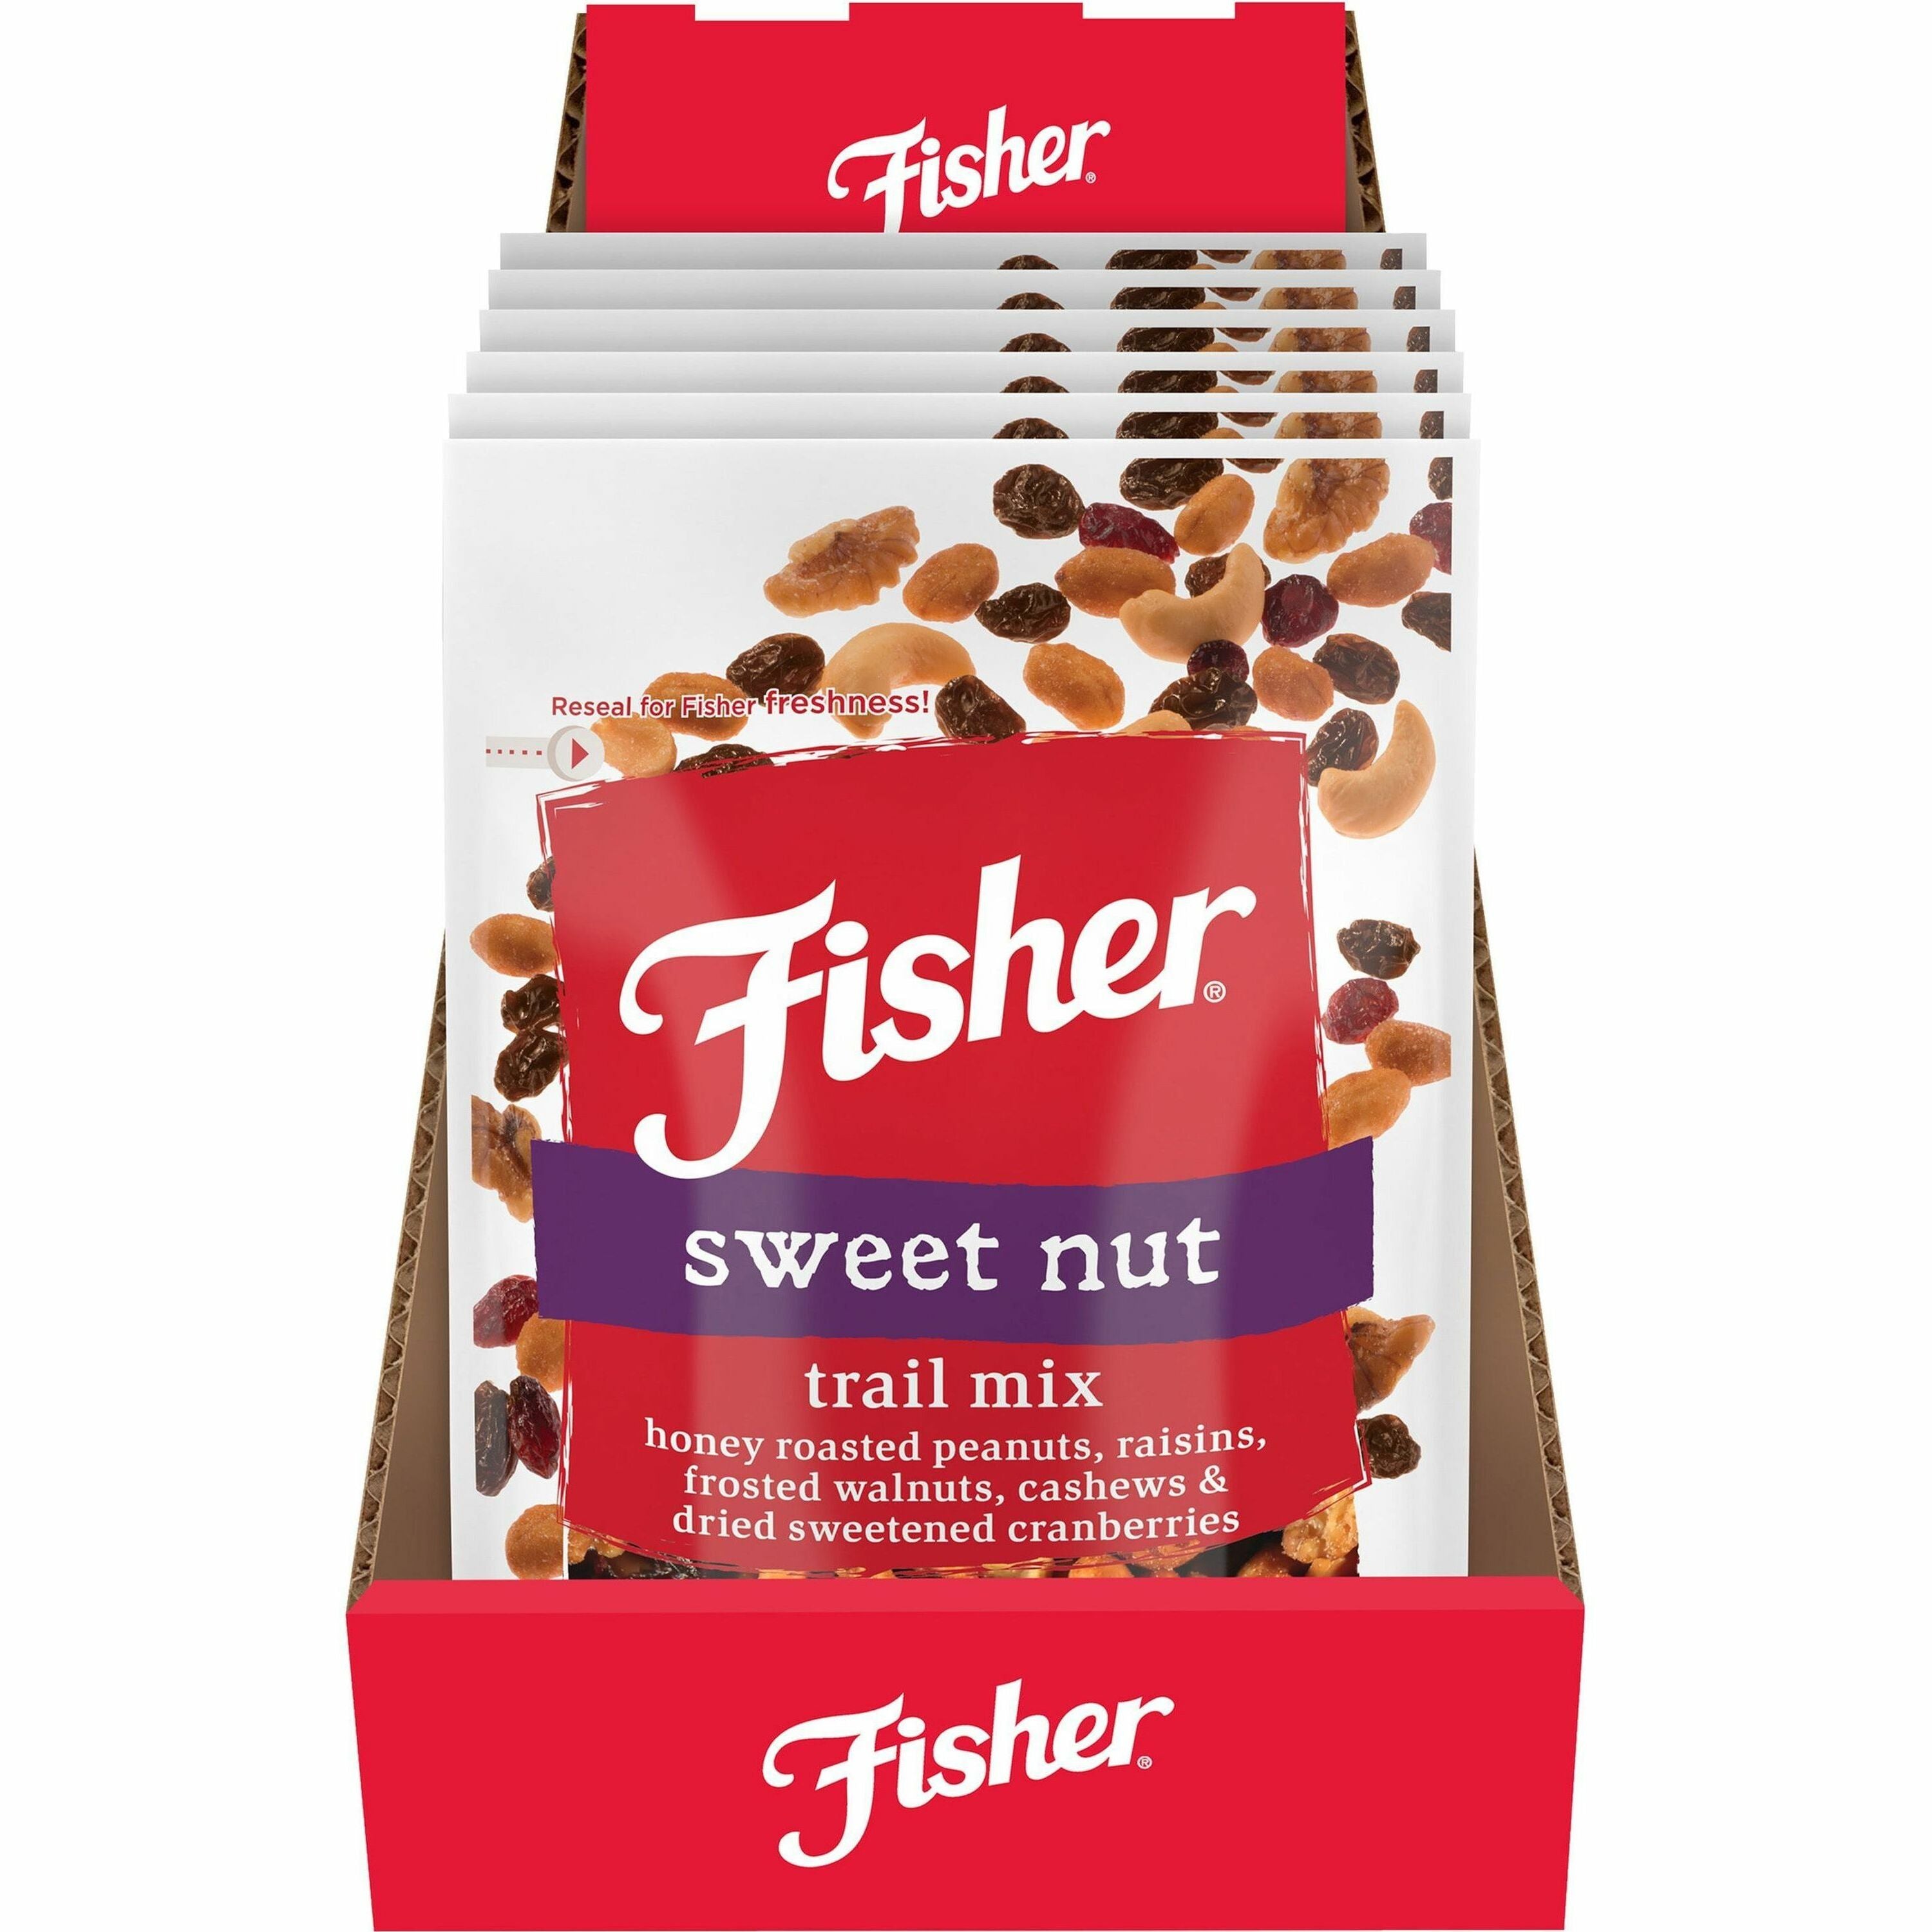 fisher-sweet-nut-mix-resealable-bag-honey-roasted-peanut-raisin-walnut-cashew-dried-cranberries-1-serving-bag-4-oz-6-carton_jbsp27169 - 1